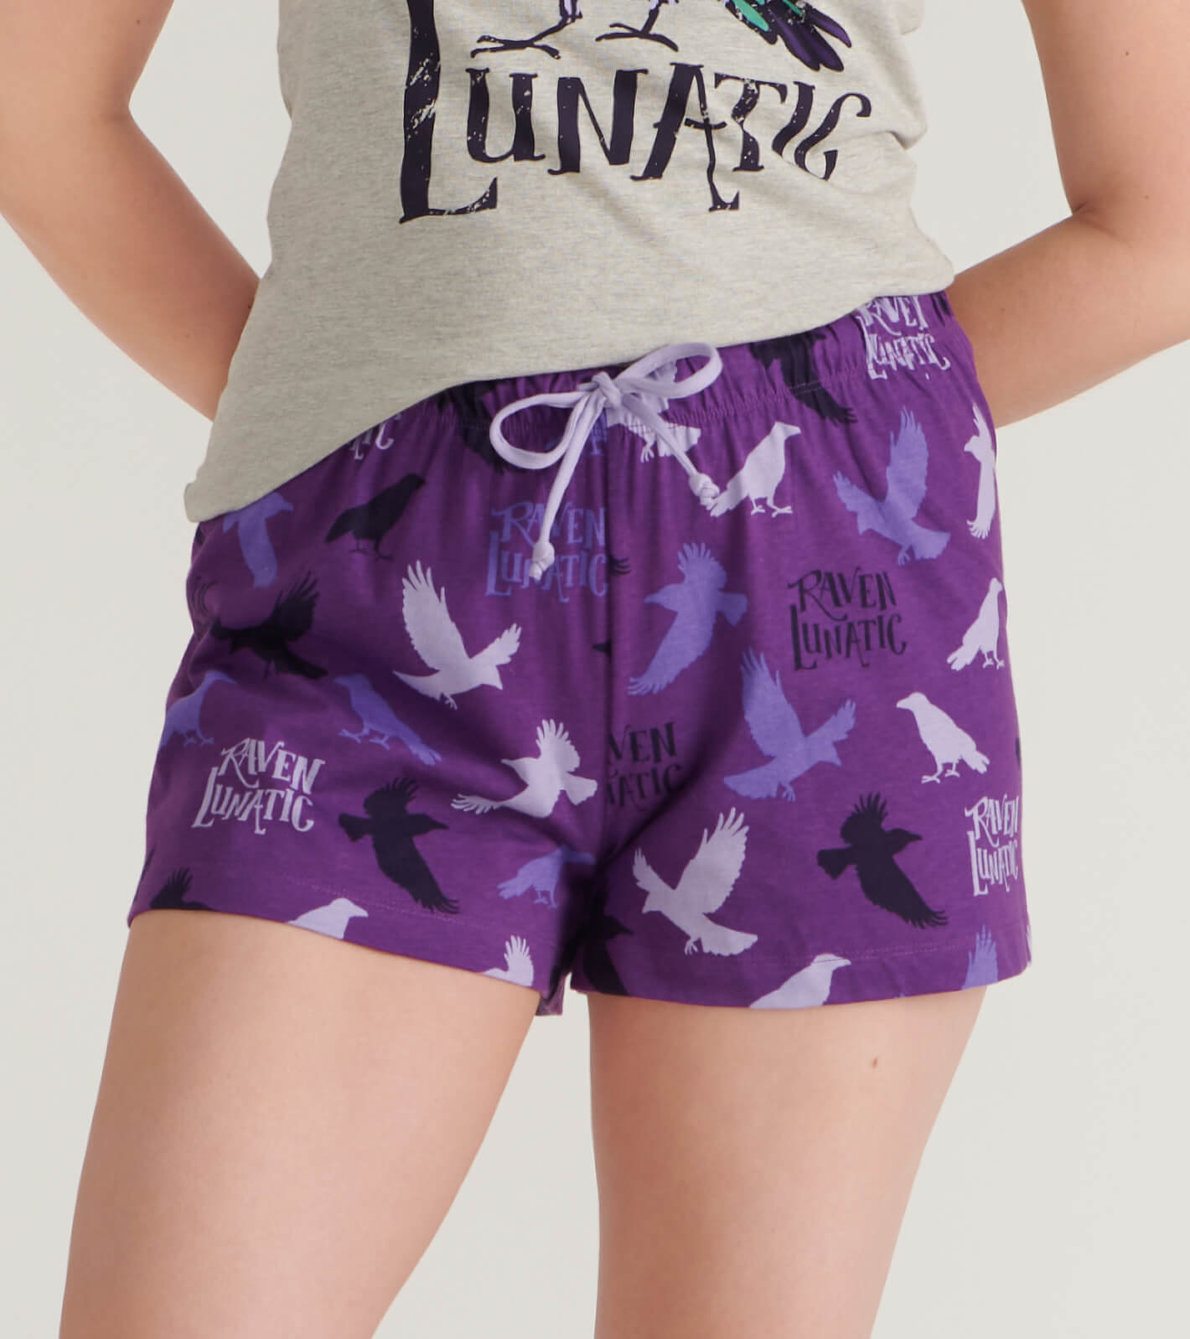 View larger image of Raven Lunatic Women's Sleep Shorts